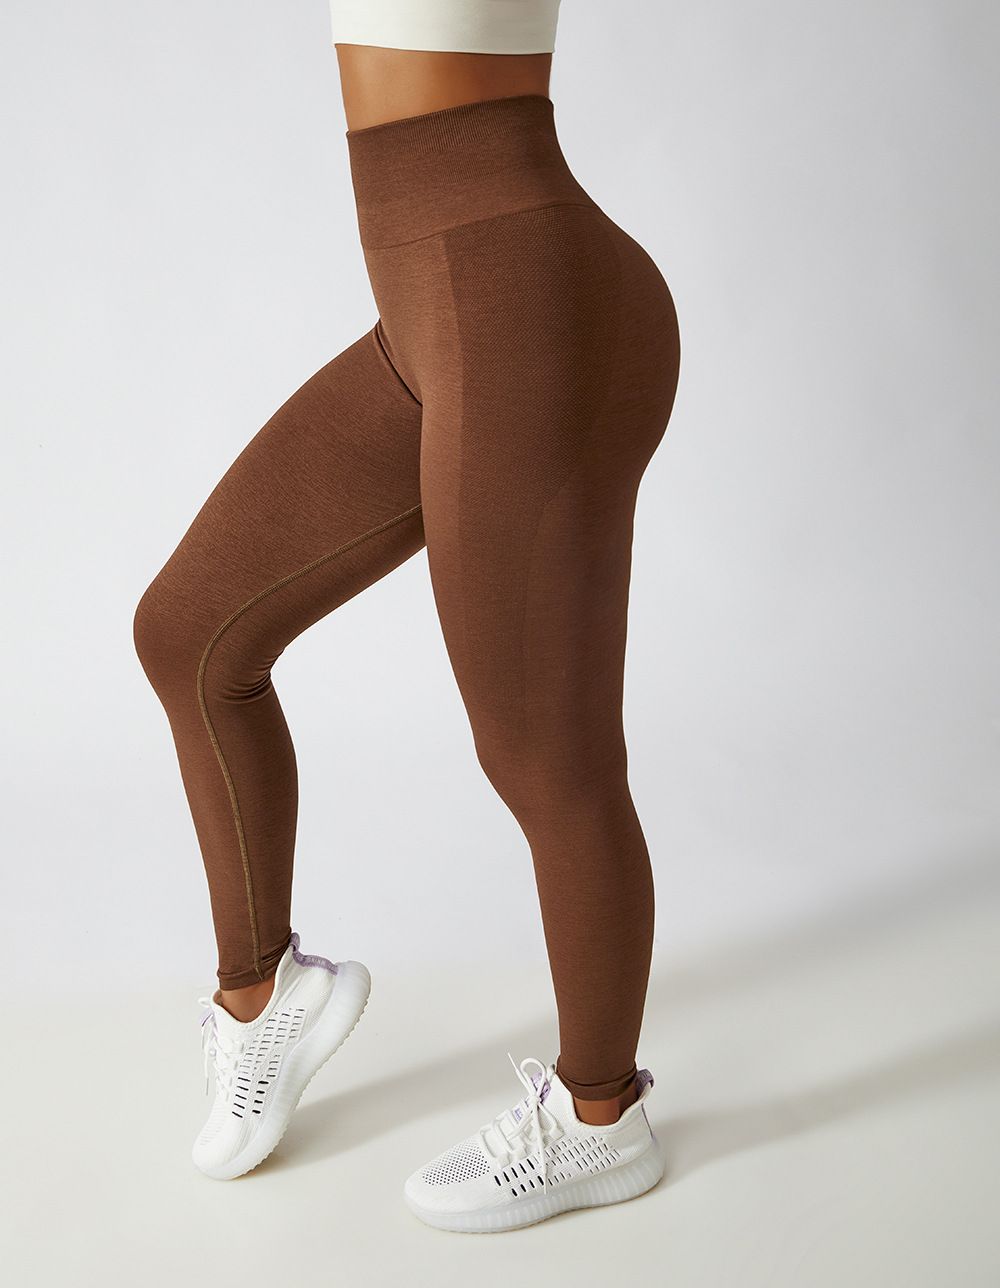 high quality seamless leggings supplier